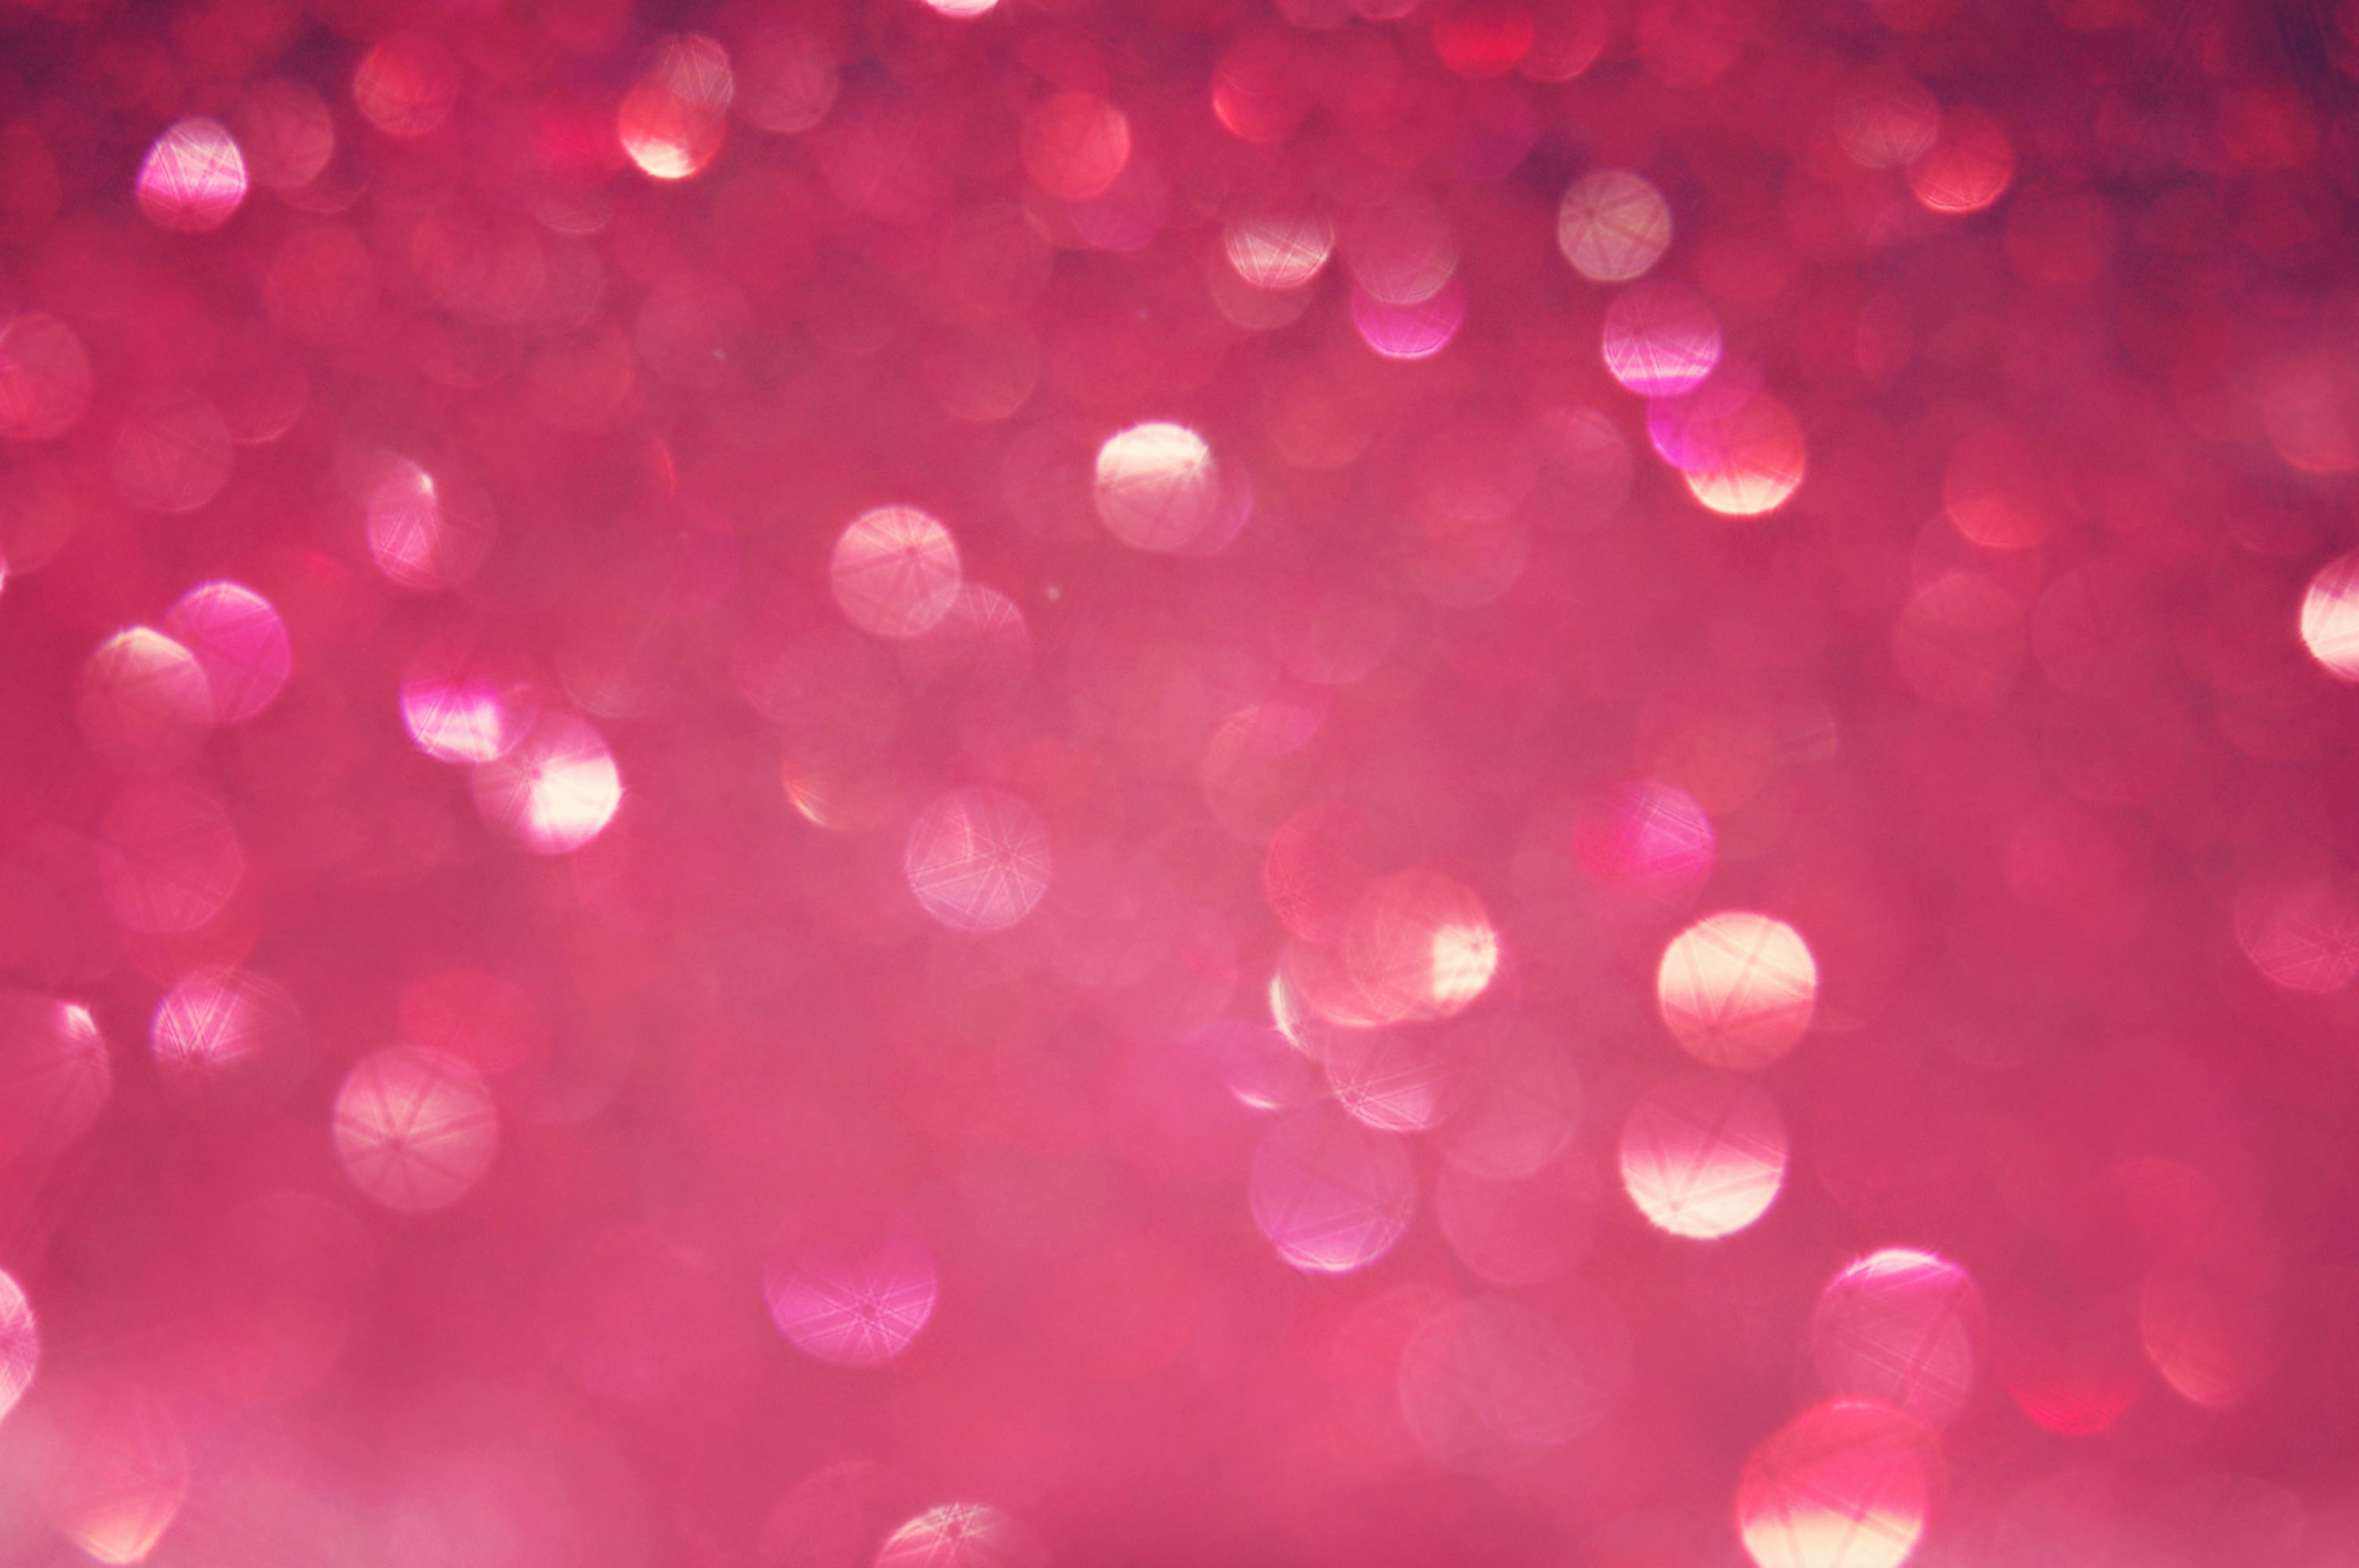 rose sparkle glitter wallpaper background pink pretty girly